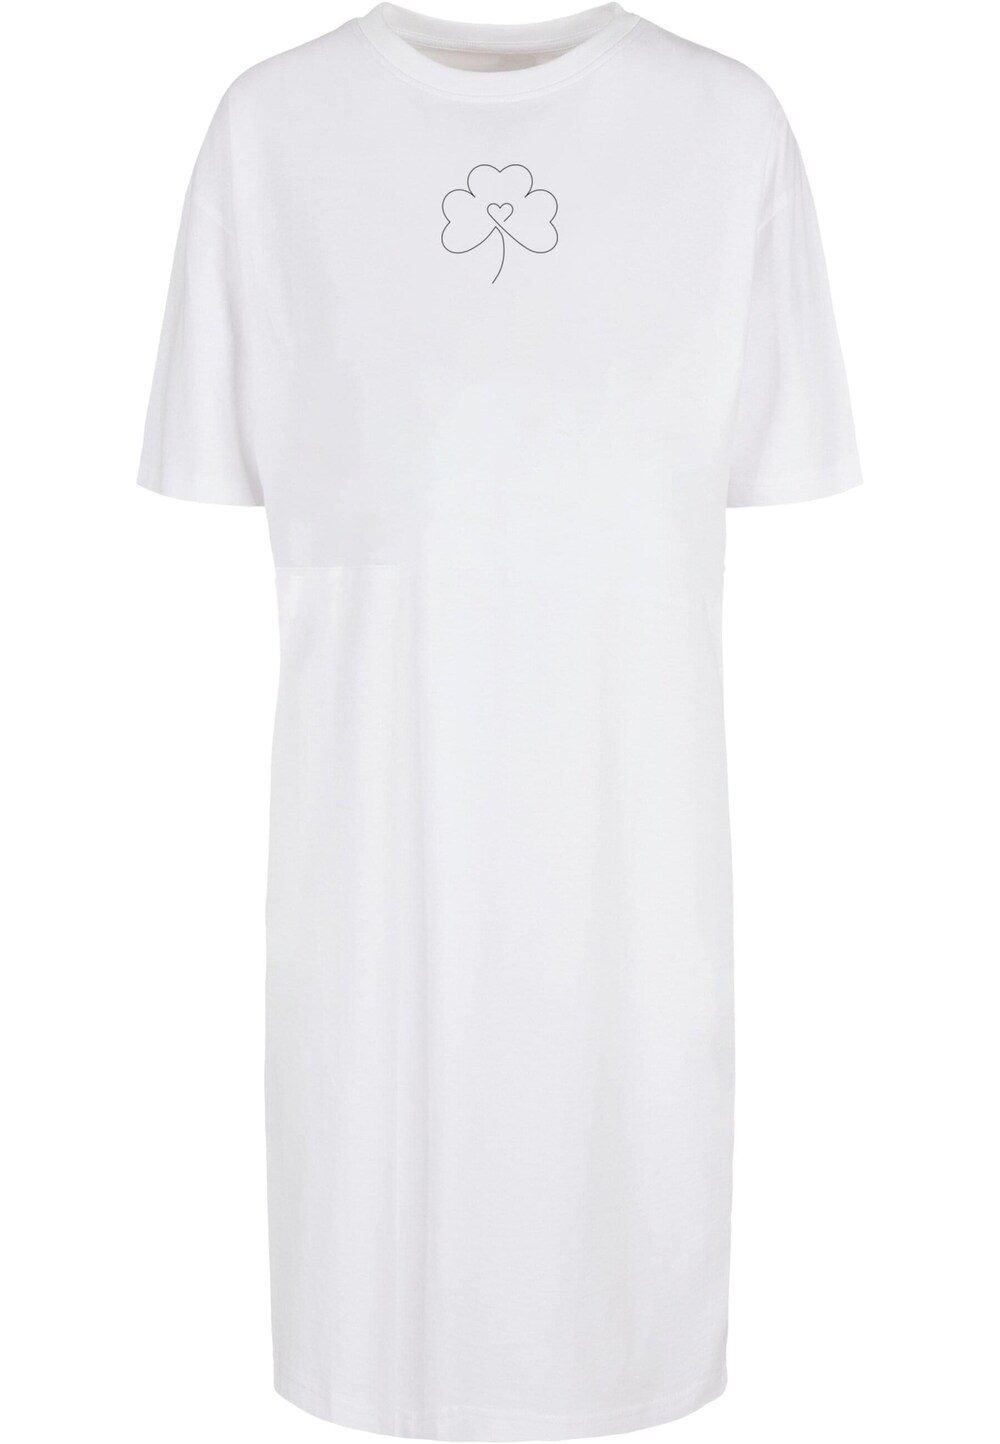 Платье Merchcode Ladies Spring, белый